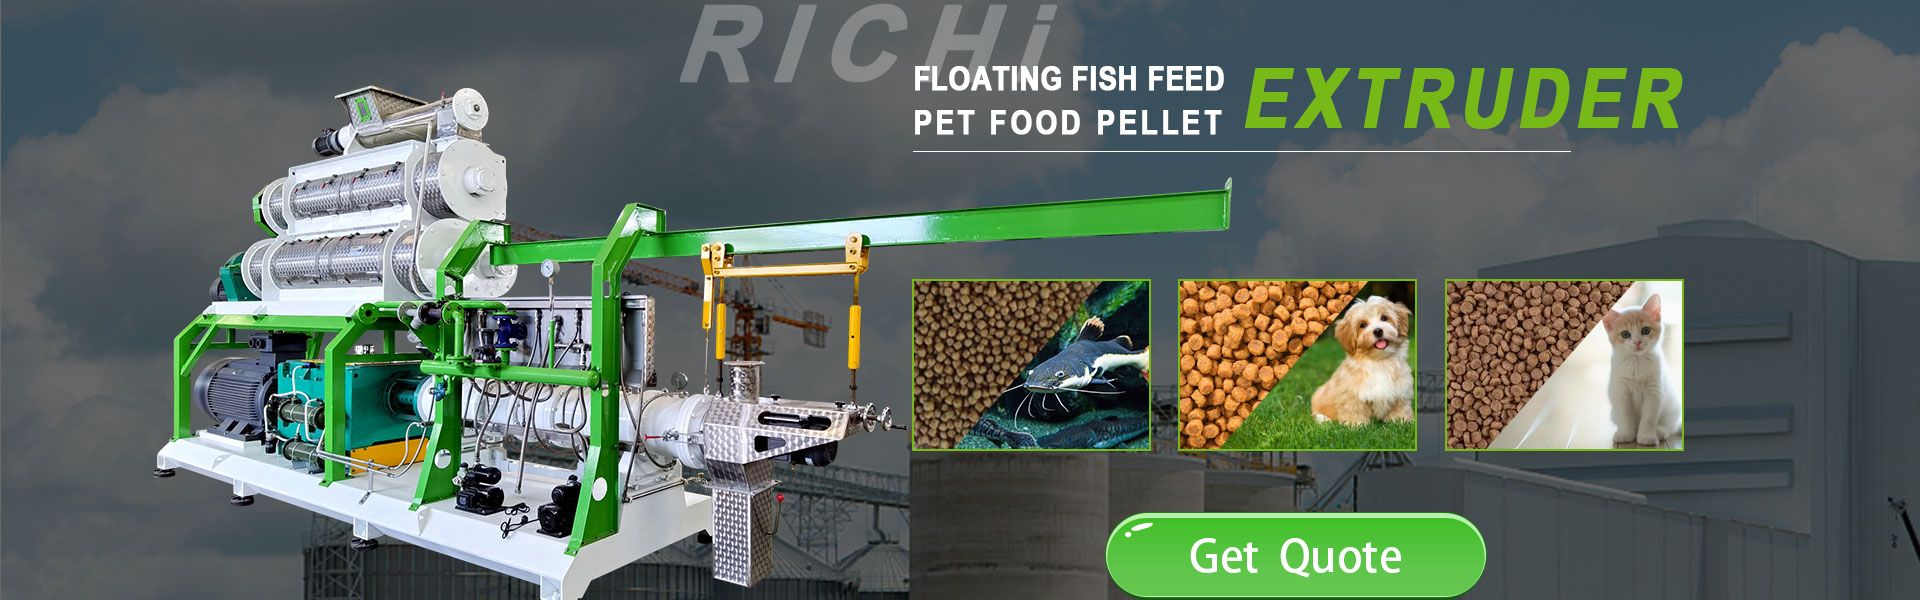 aqua fish feed float pellet extruder machine for sale